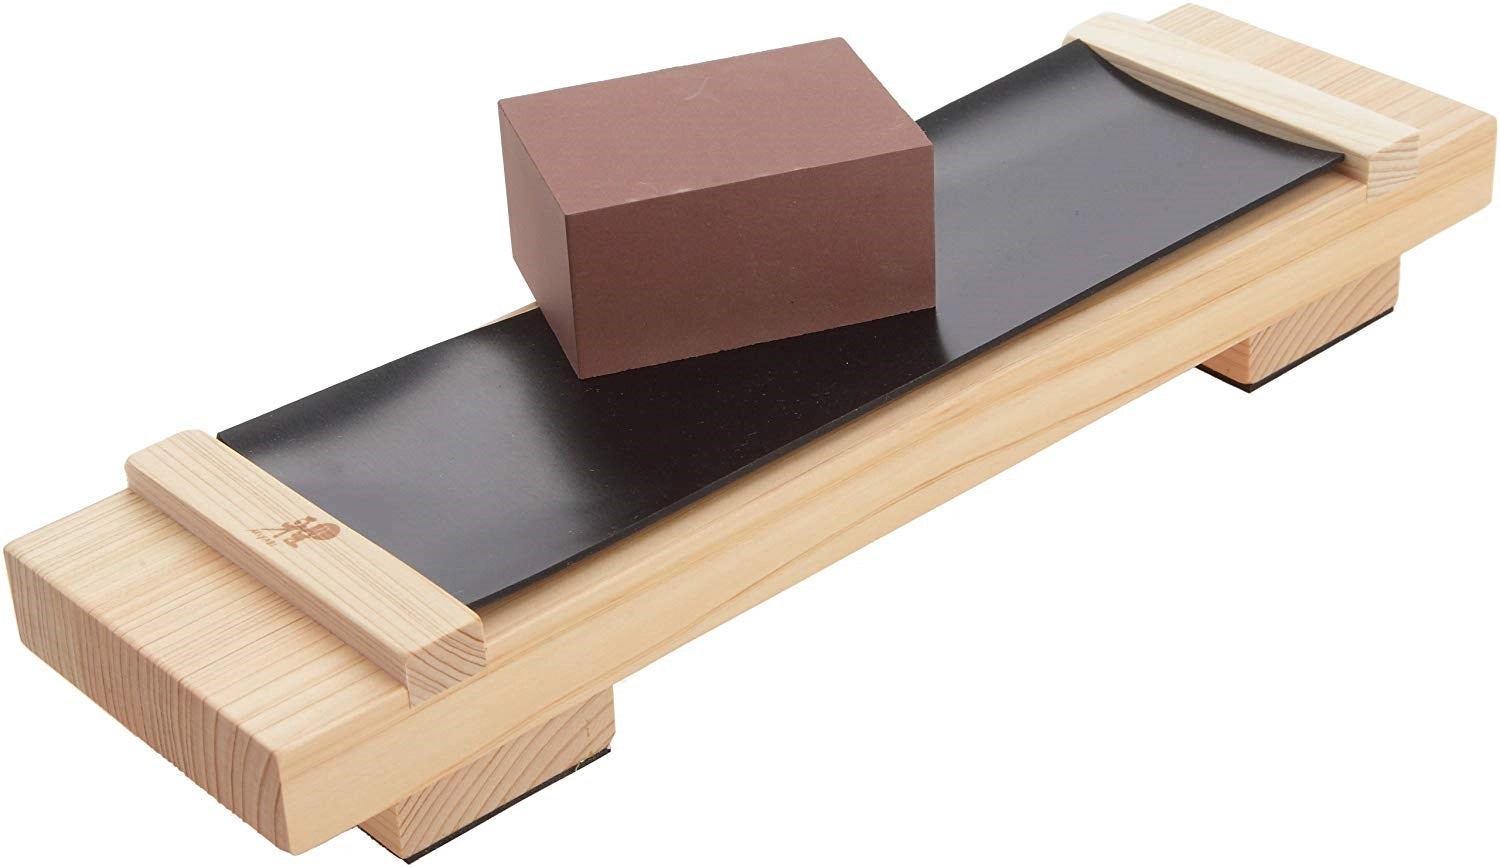 Miyabi Toishi Pro Messerschleif Basis Kit, 29x8x4.5 cm - KAQTU Design